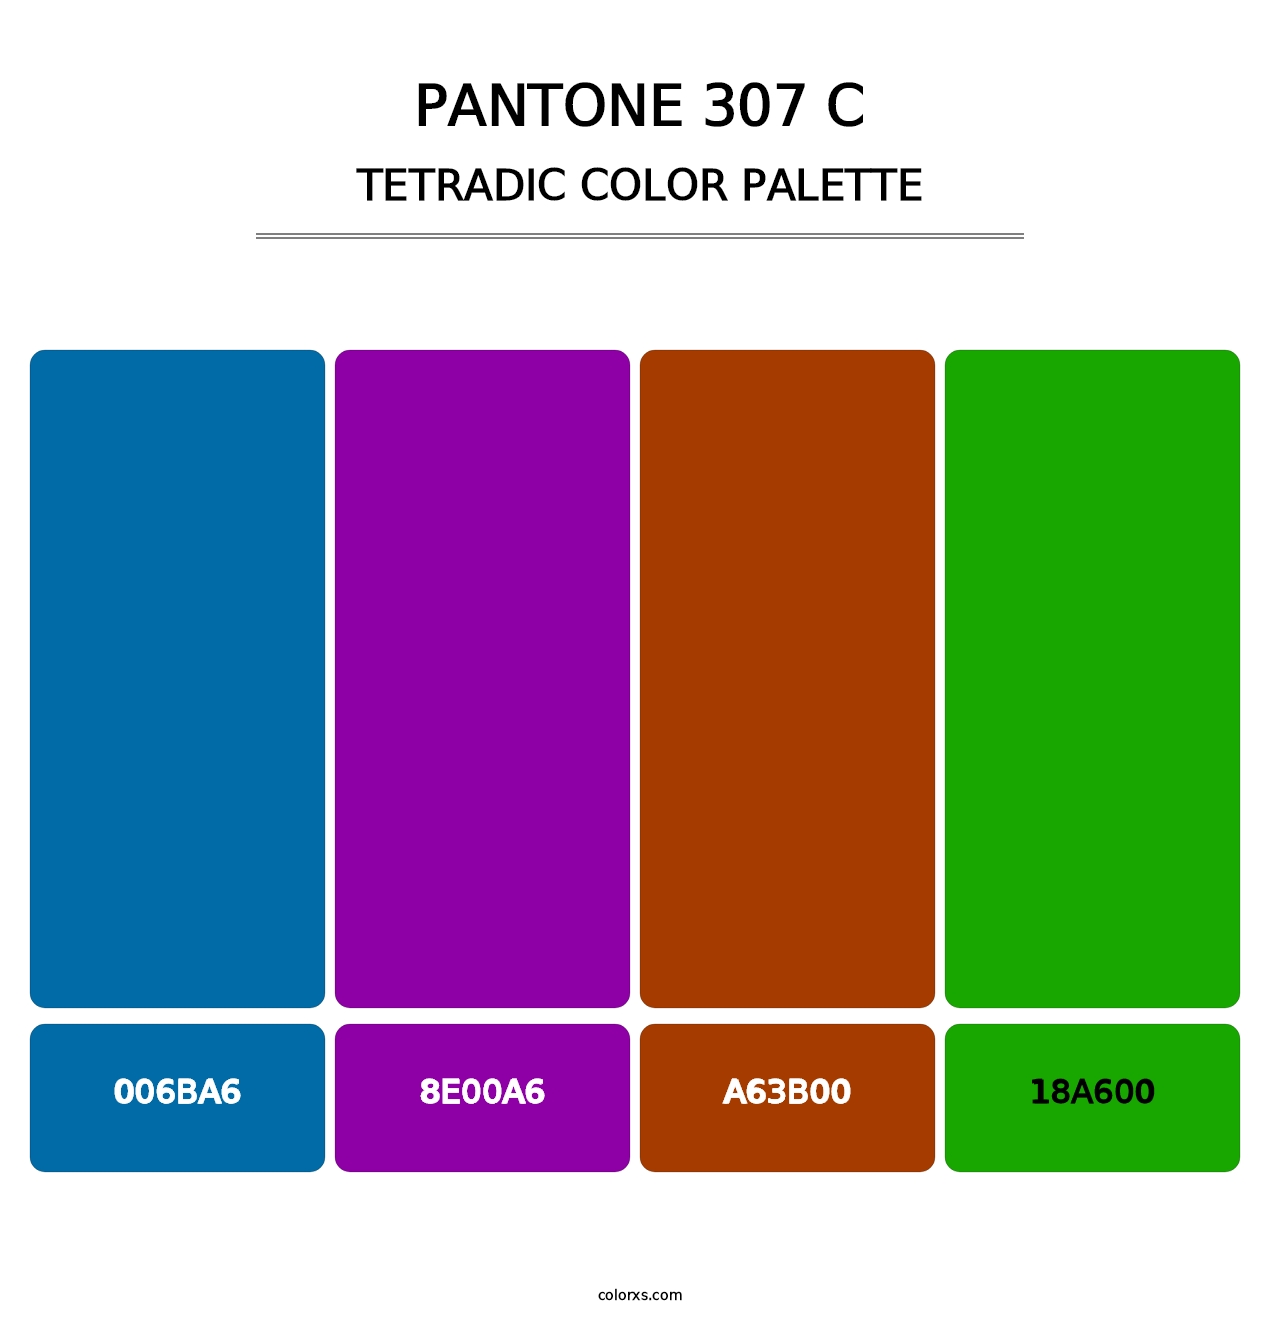 PANTONE 307 C - Tetradic Color Palette